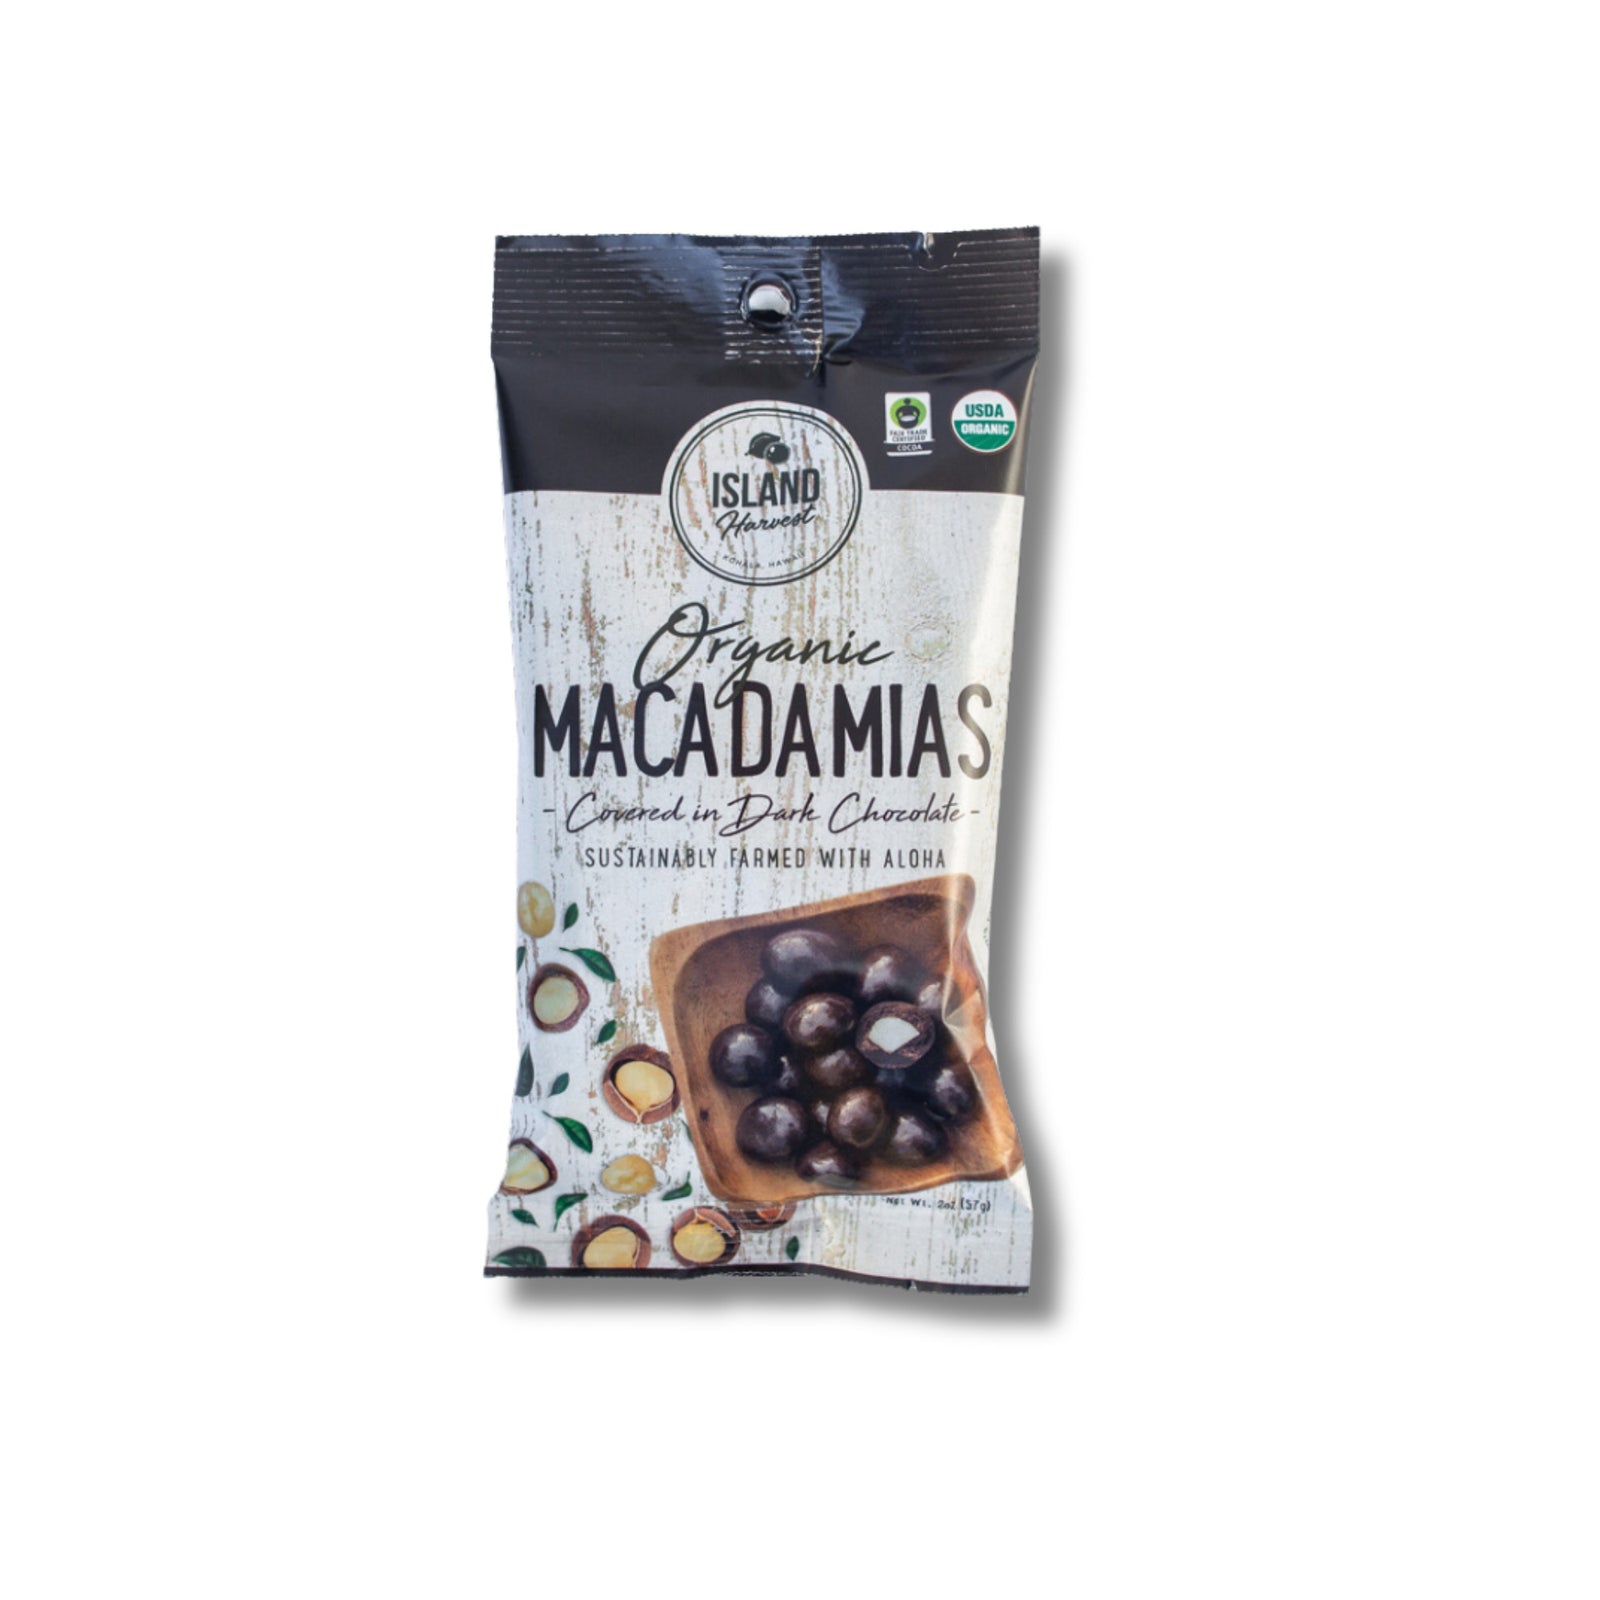 Pop-Up Mākeke - Island Harvest - Snack Size Organic Macadamia Nuts with Dark Chocolate - Front View